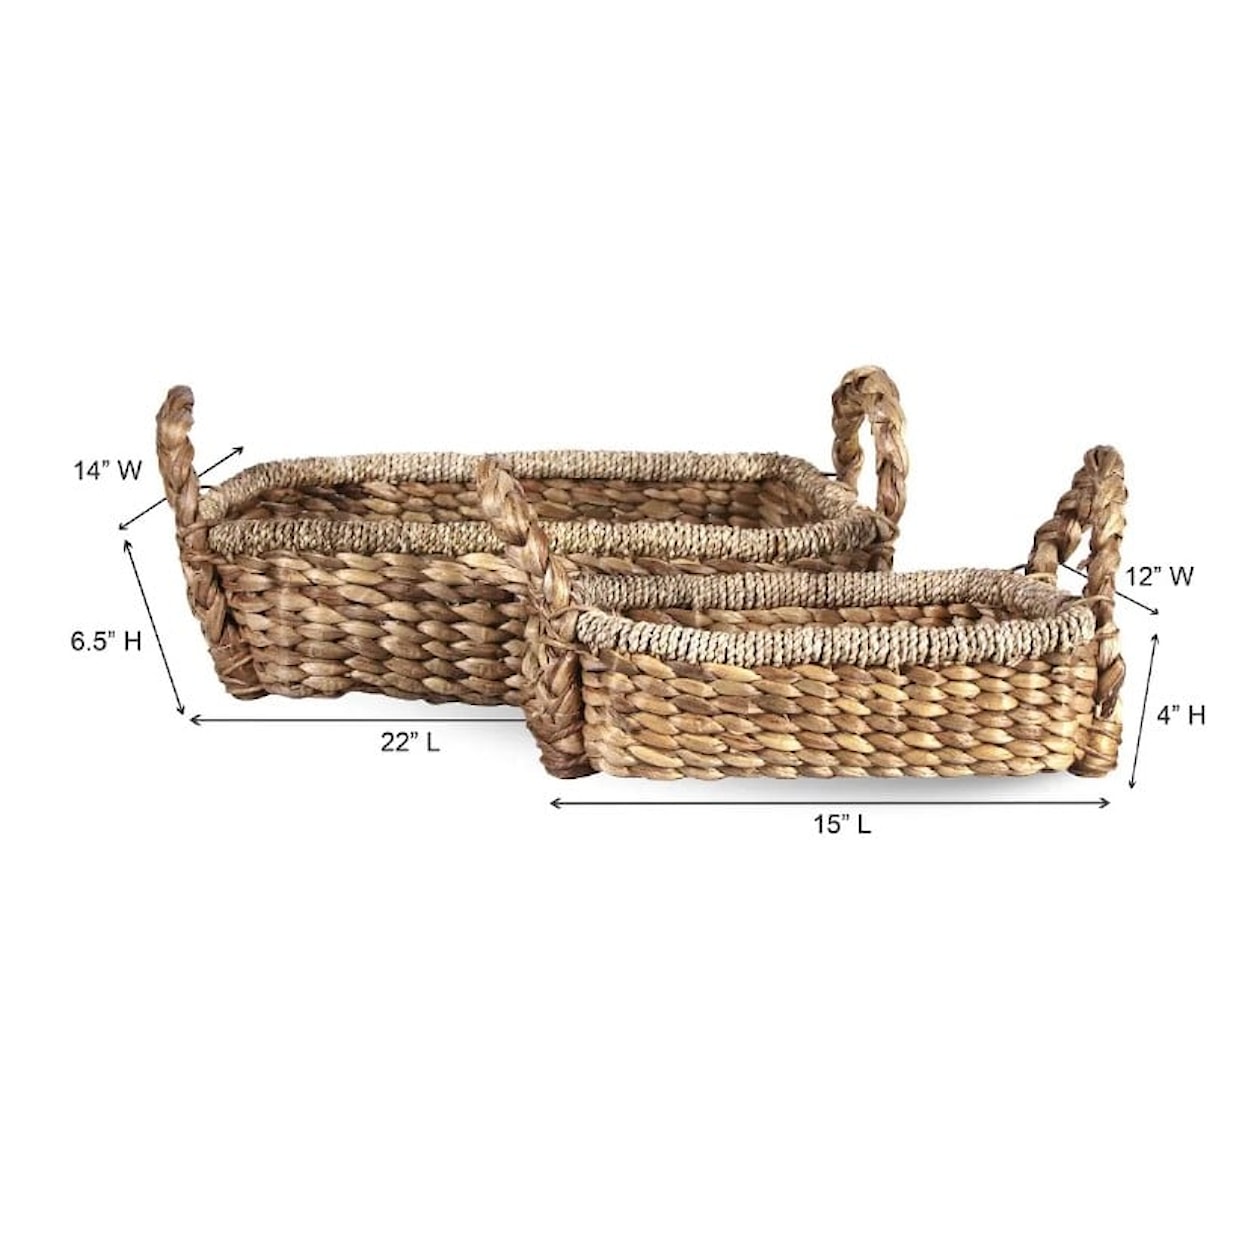 Ibolili Baskets and Sets BRAIDED WATER HYACINTH TRAY, RECT